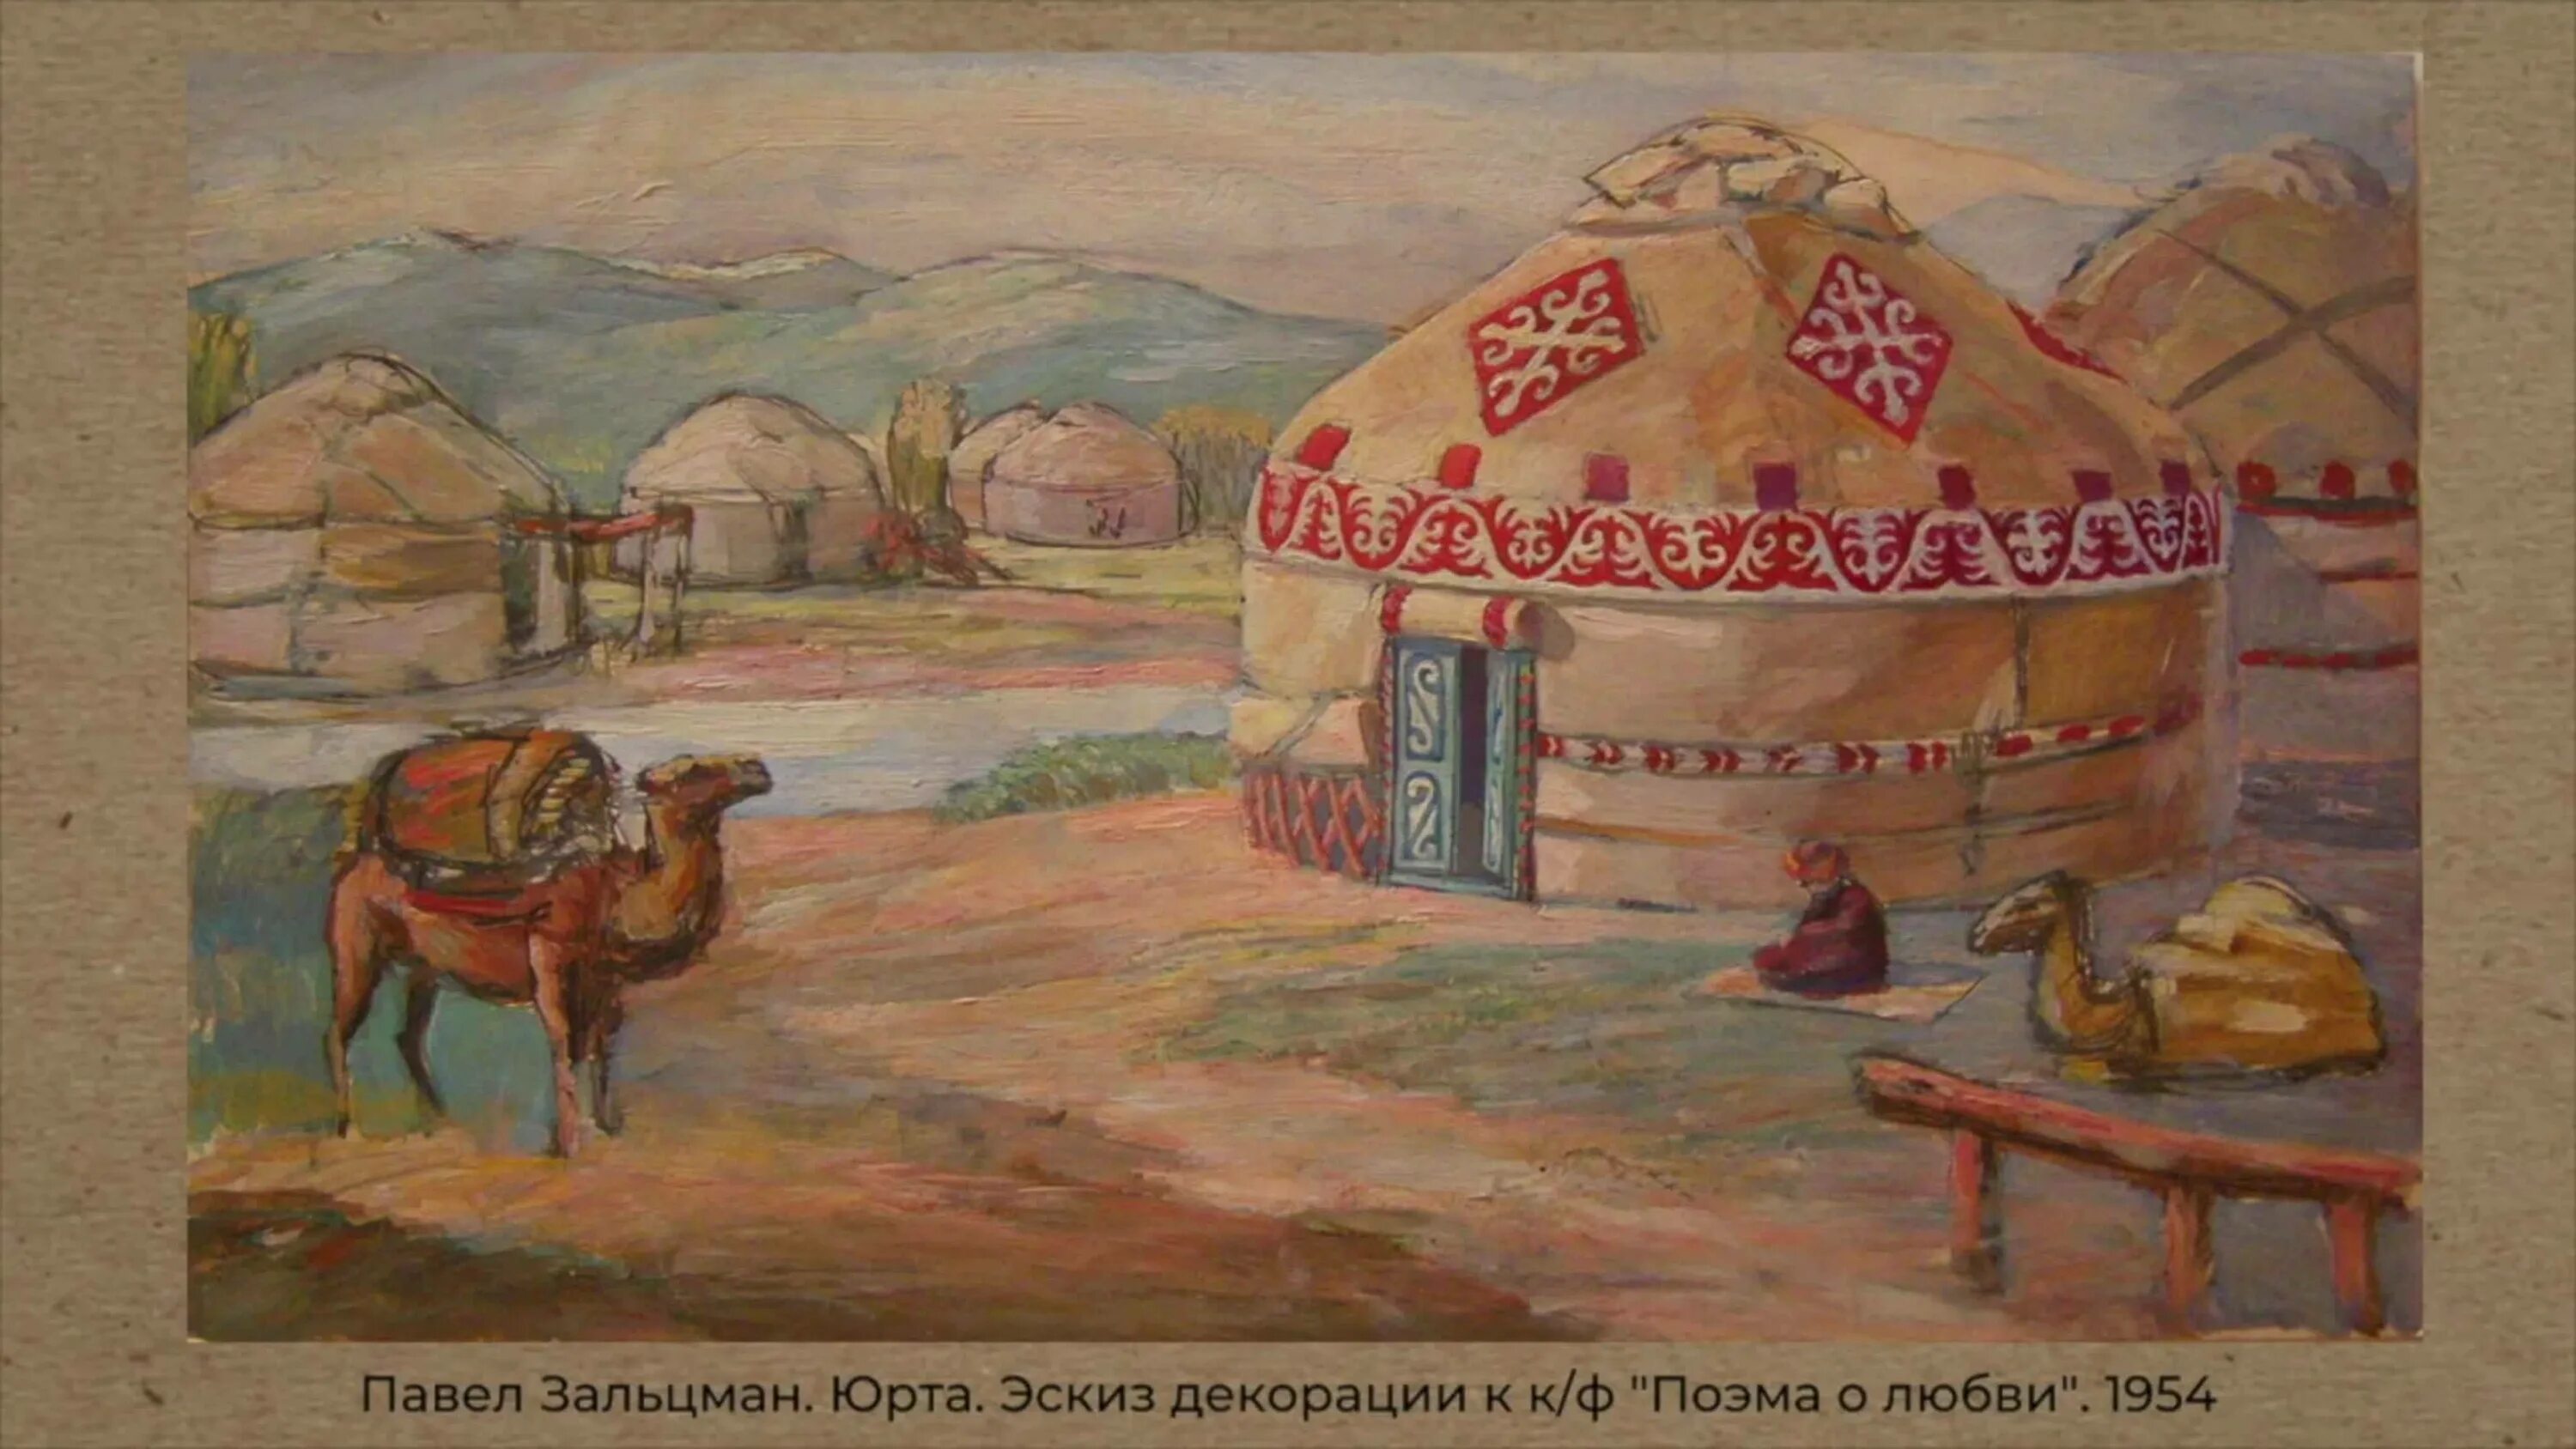 Казахская картина юрта. Башкир юрта рис. Юрта Кыргызская живопись. Казахская юрта Муканов.